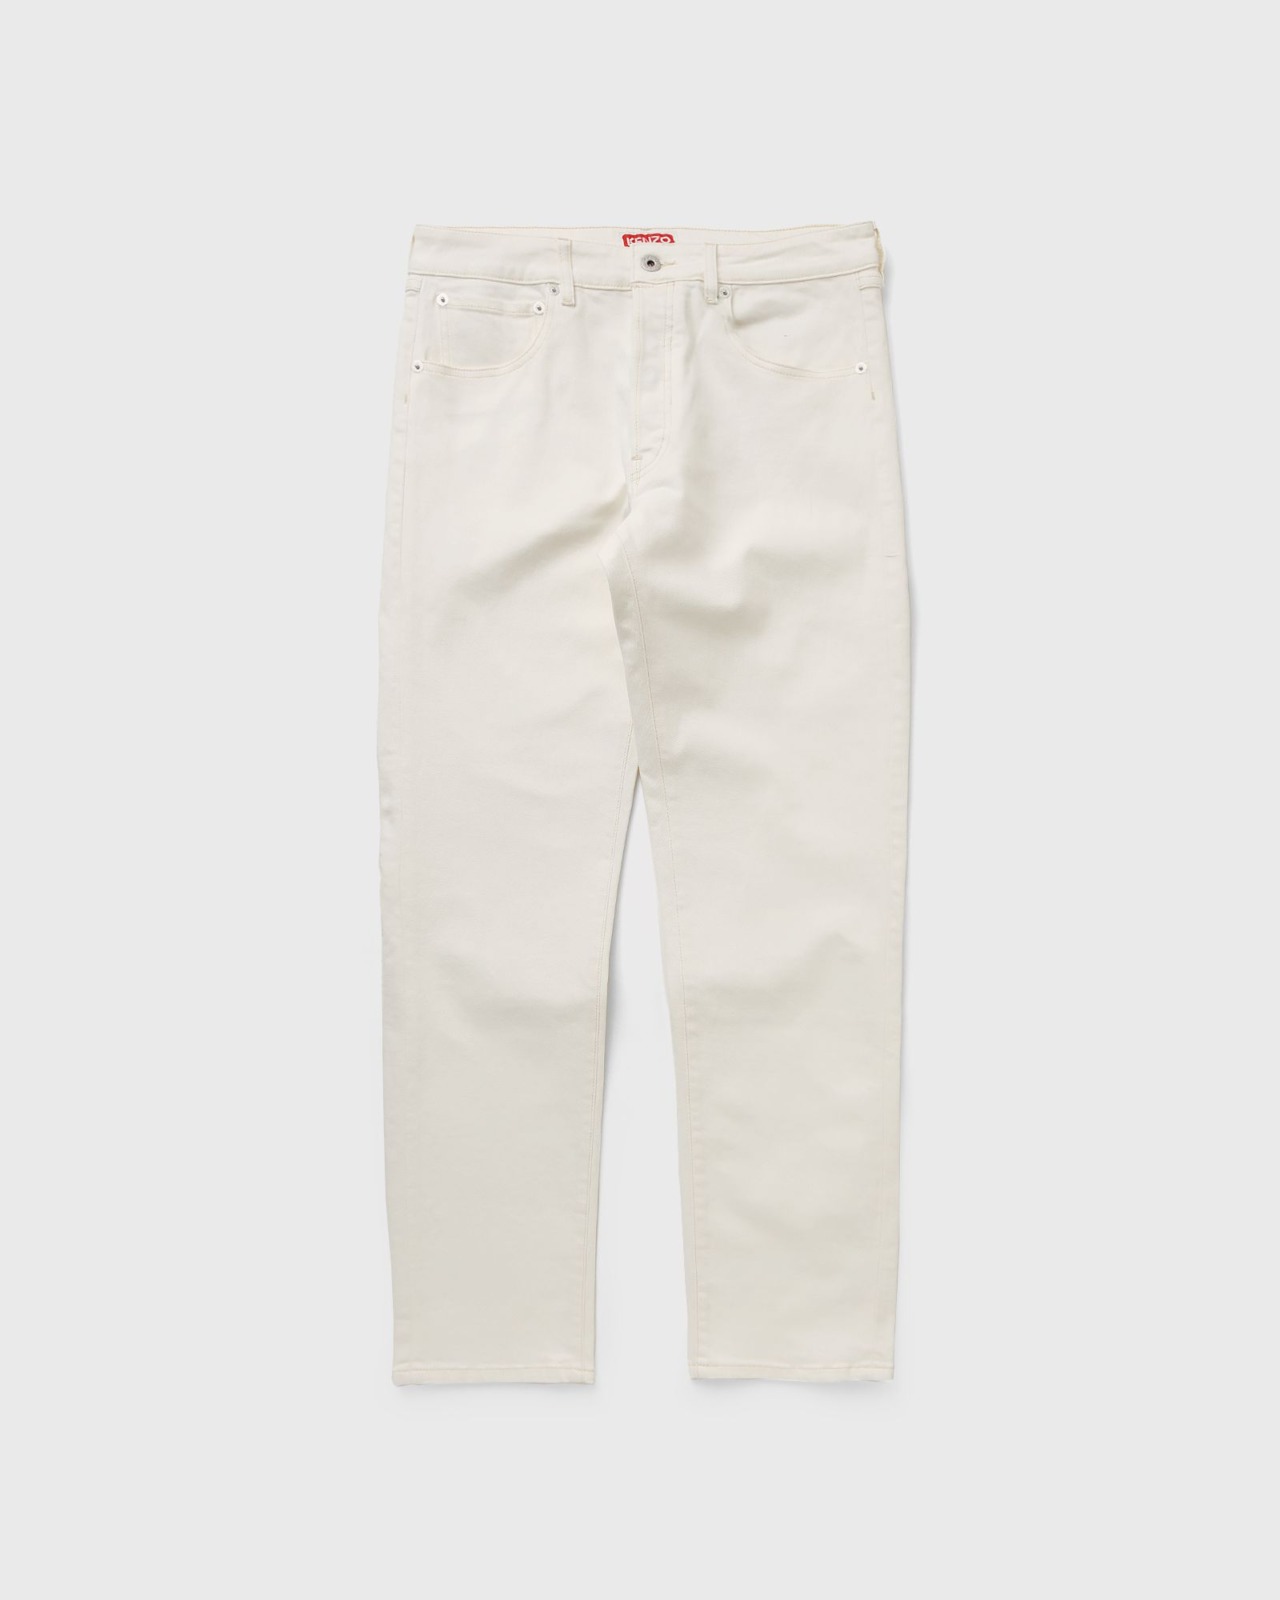 Kenzo - Man Slim Jeans in White from Bstn GOOFASH